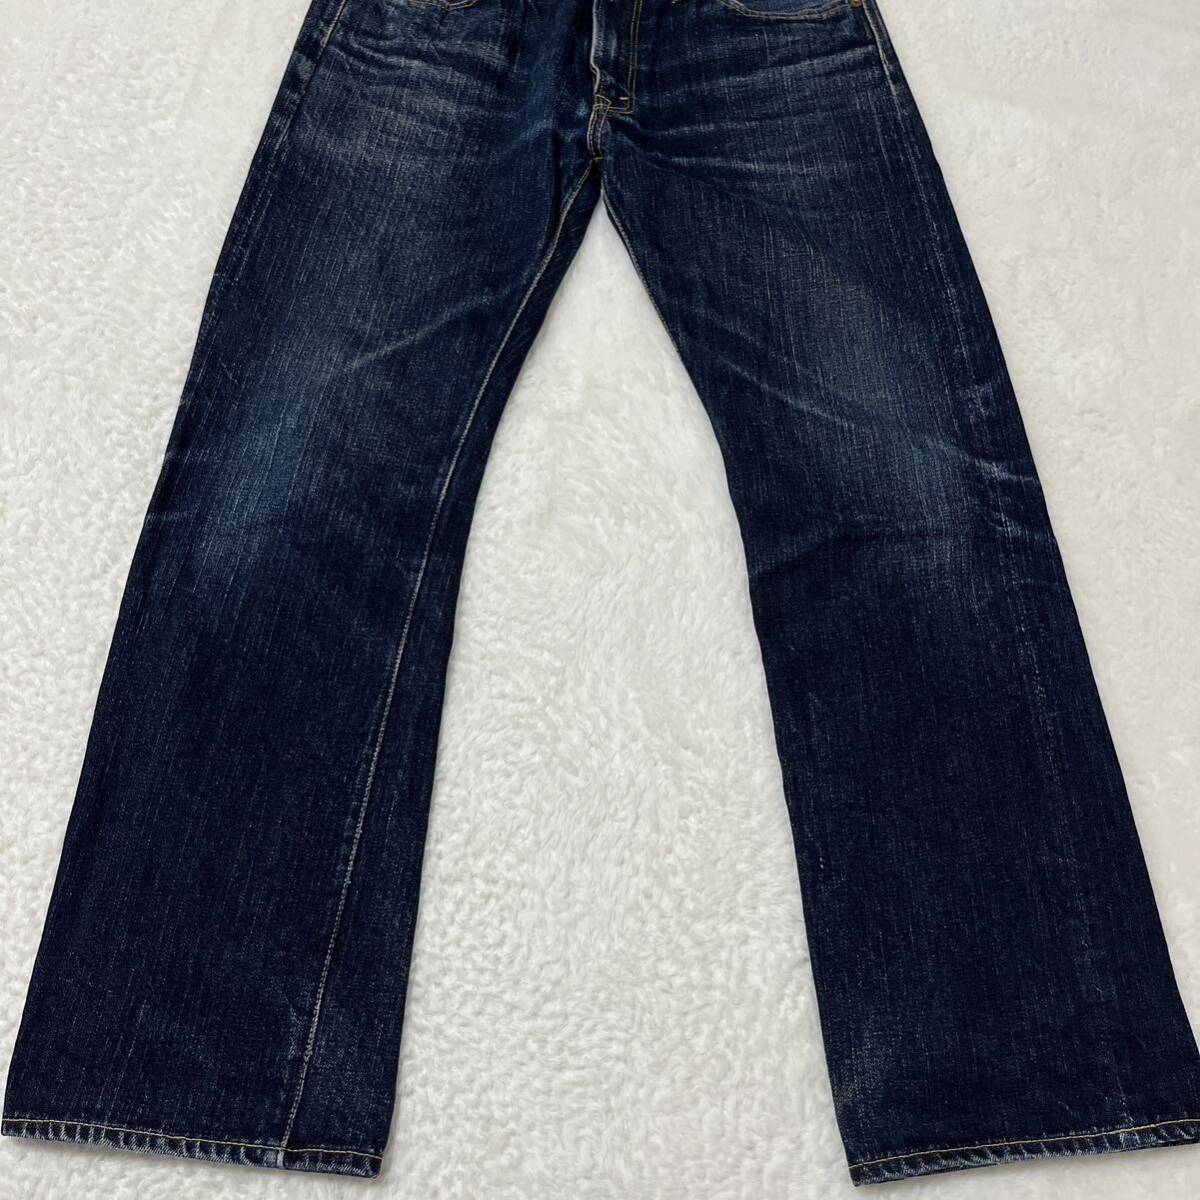  made in Japan THE FLATHEADW33 Flat Head Denim pants red ear cell bichi jeans 3301